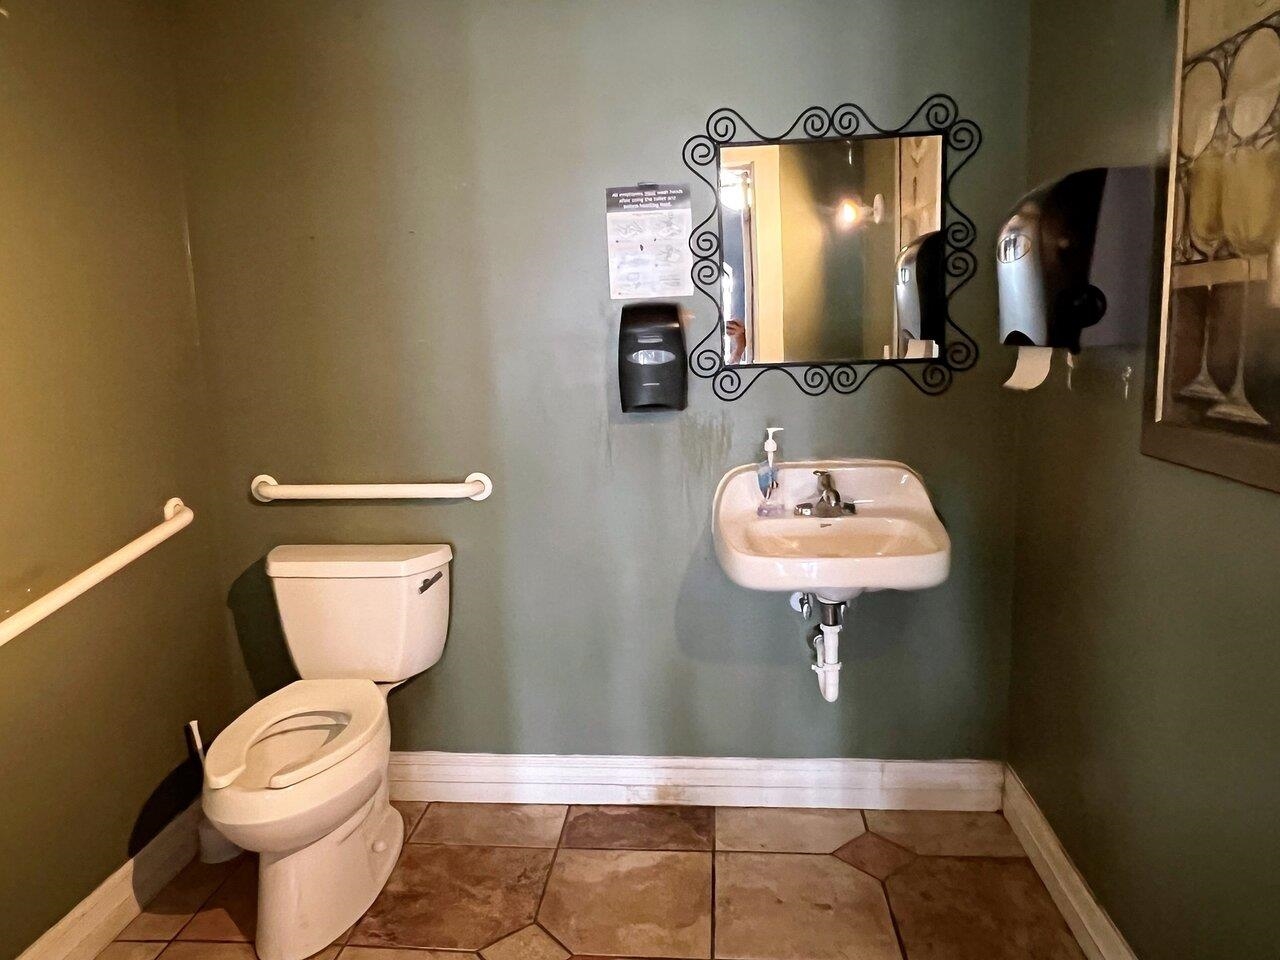 Restaurant bathroom